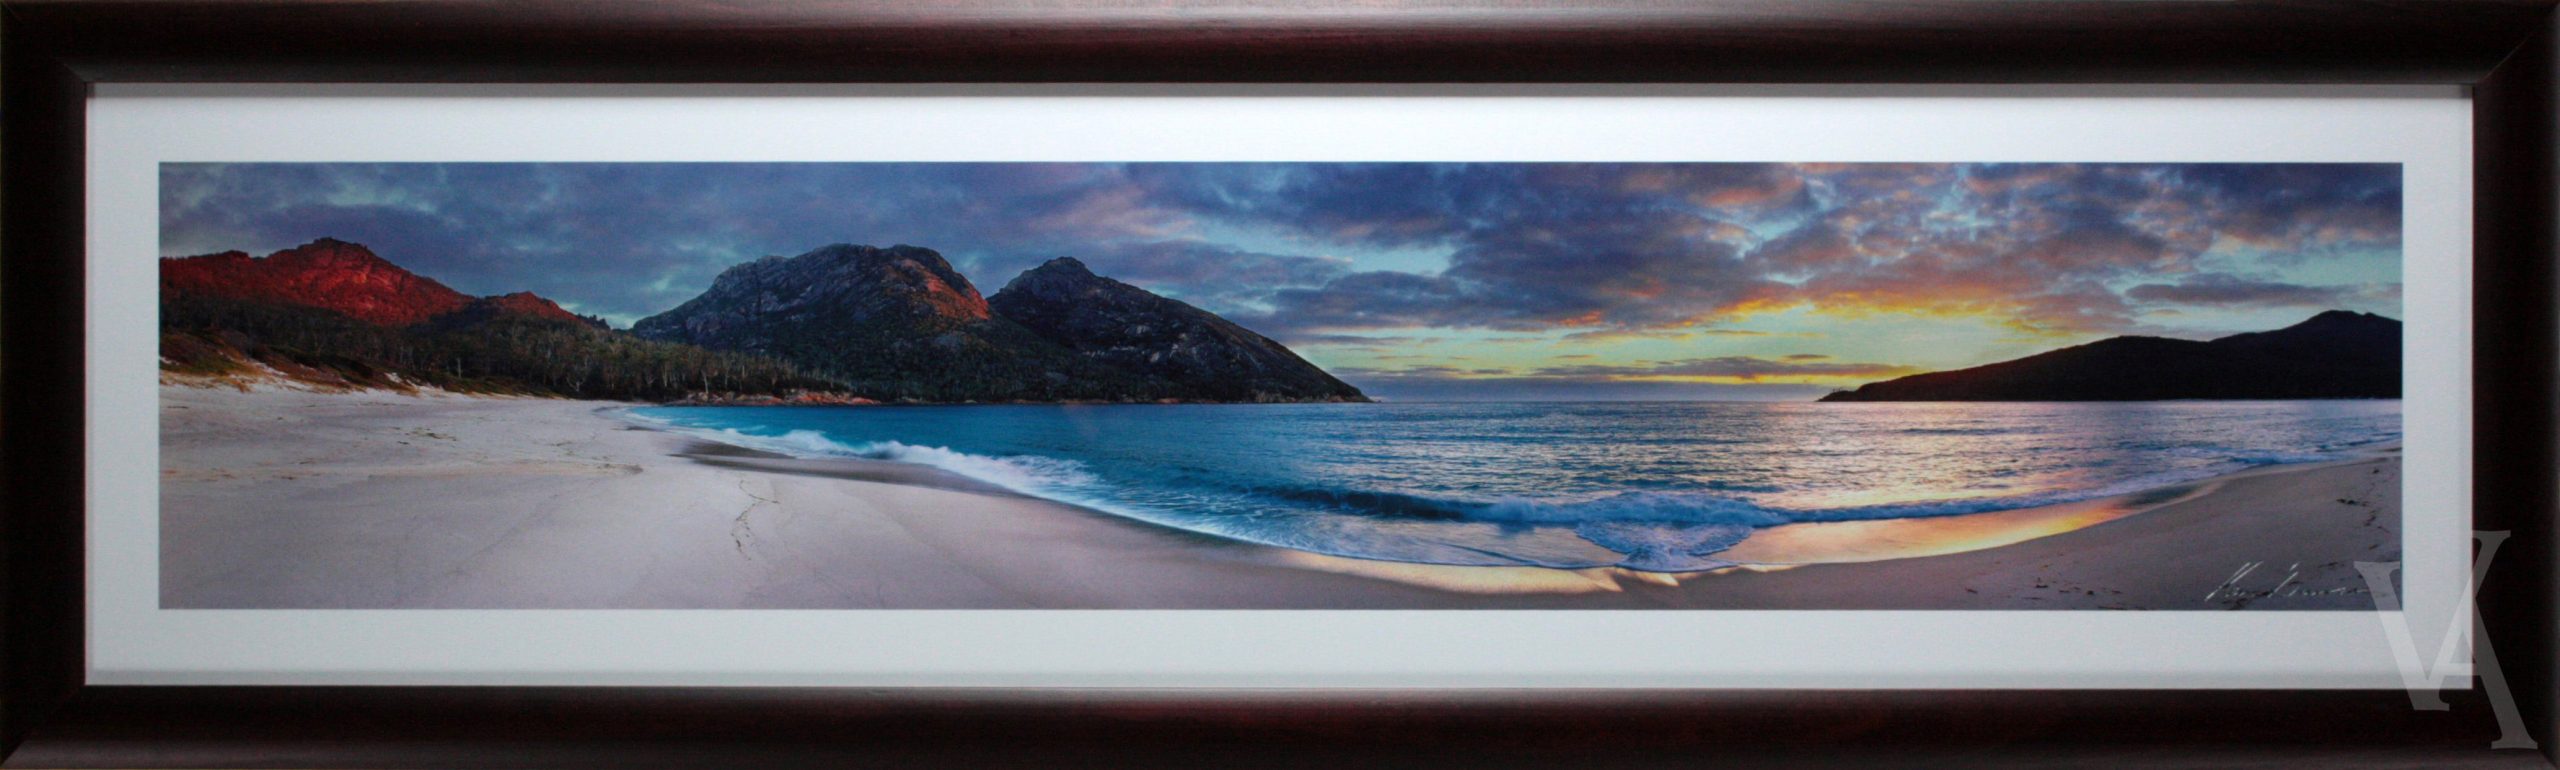 Ken Duncan Photography Framed Signature Series Art Print. Sunrise Wine Glass Bay Panoramic Signed Photo.